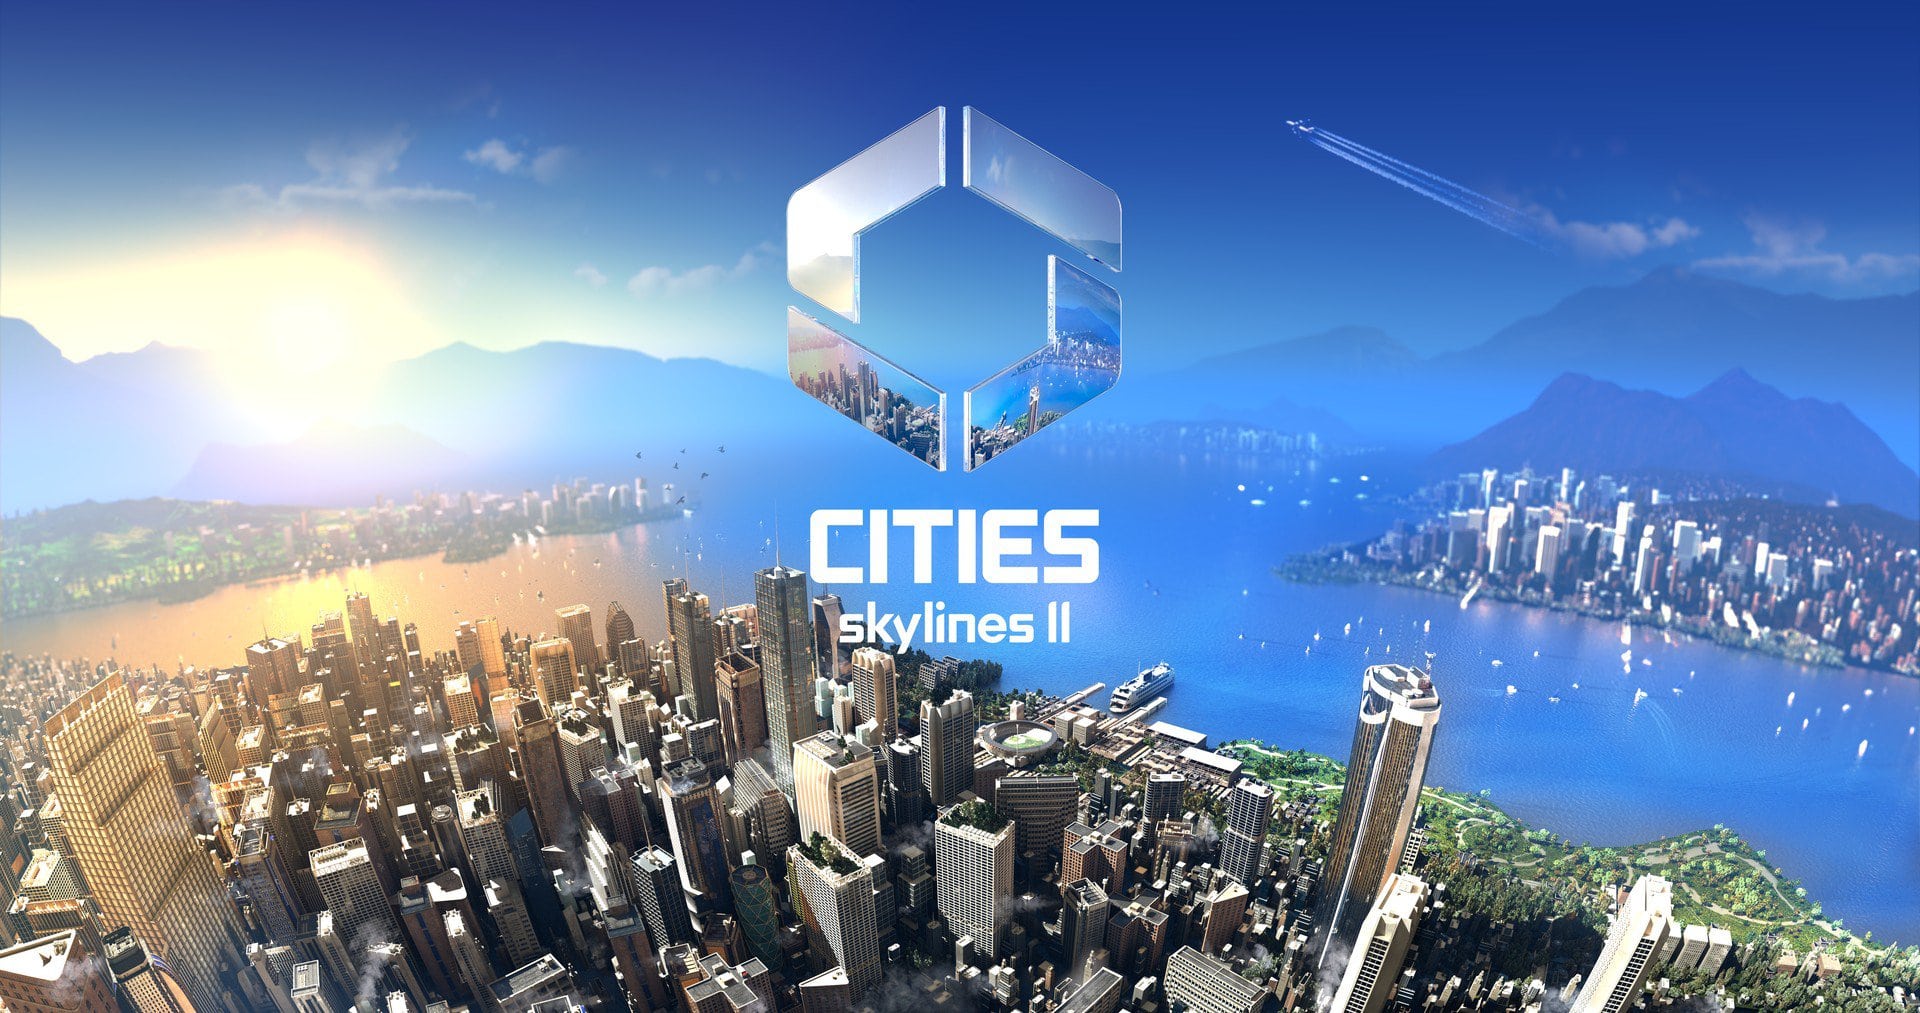 Cities skylines 2 duyuruldu 20230307